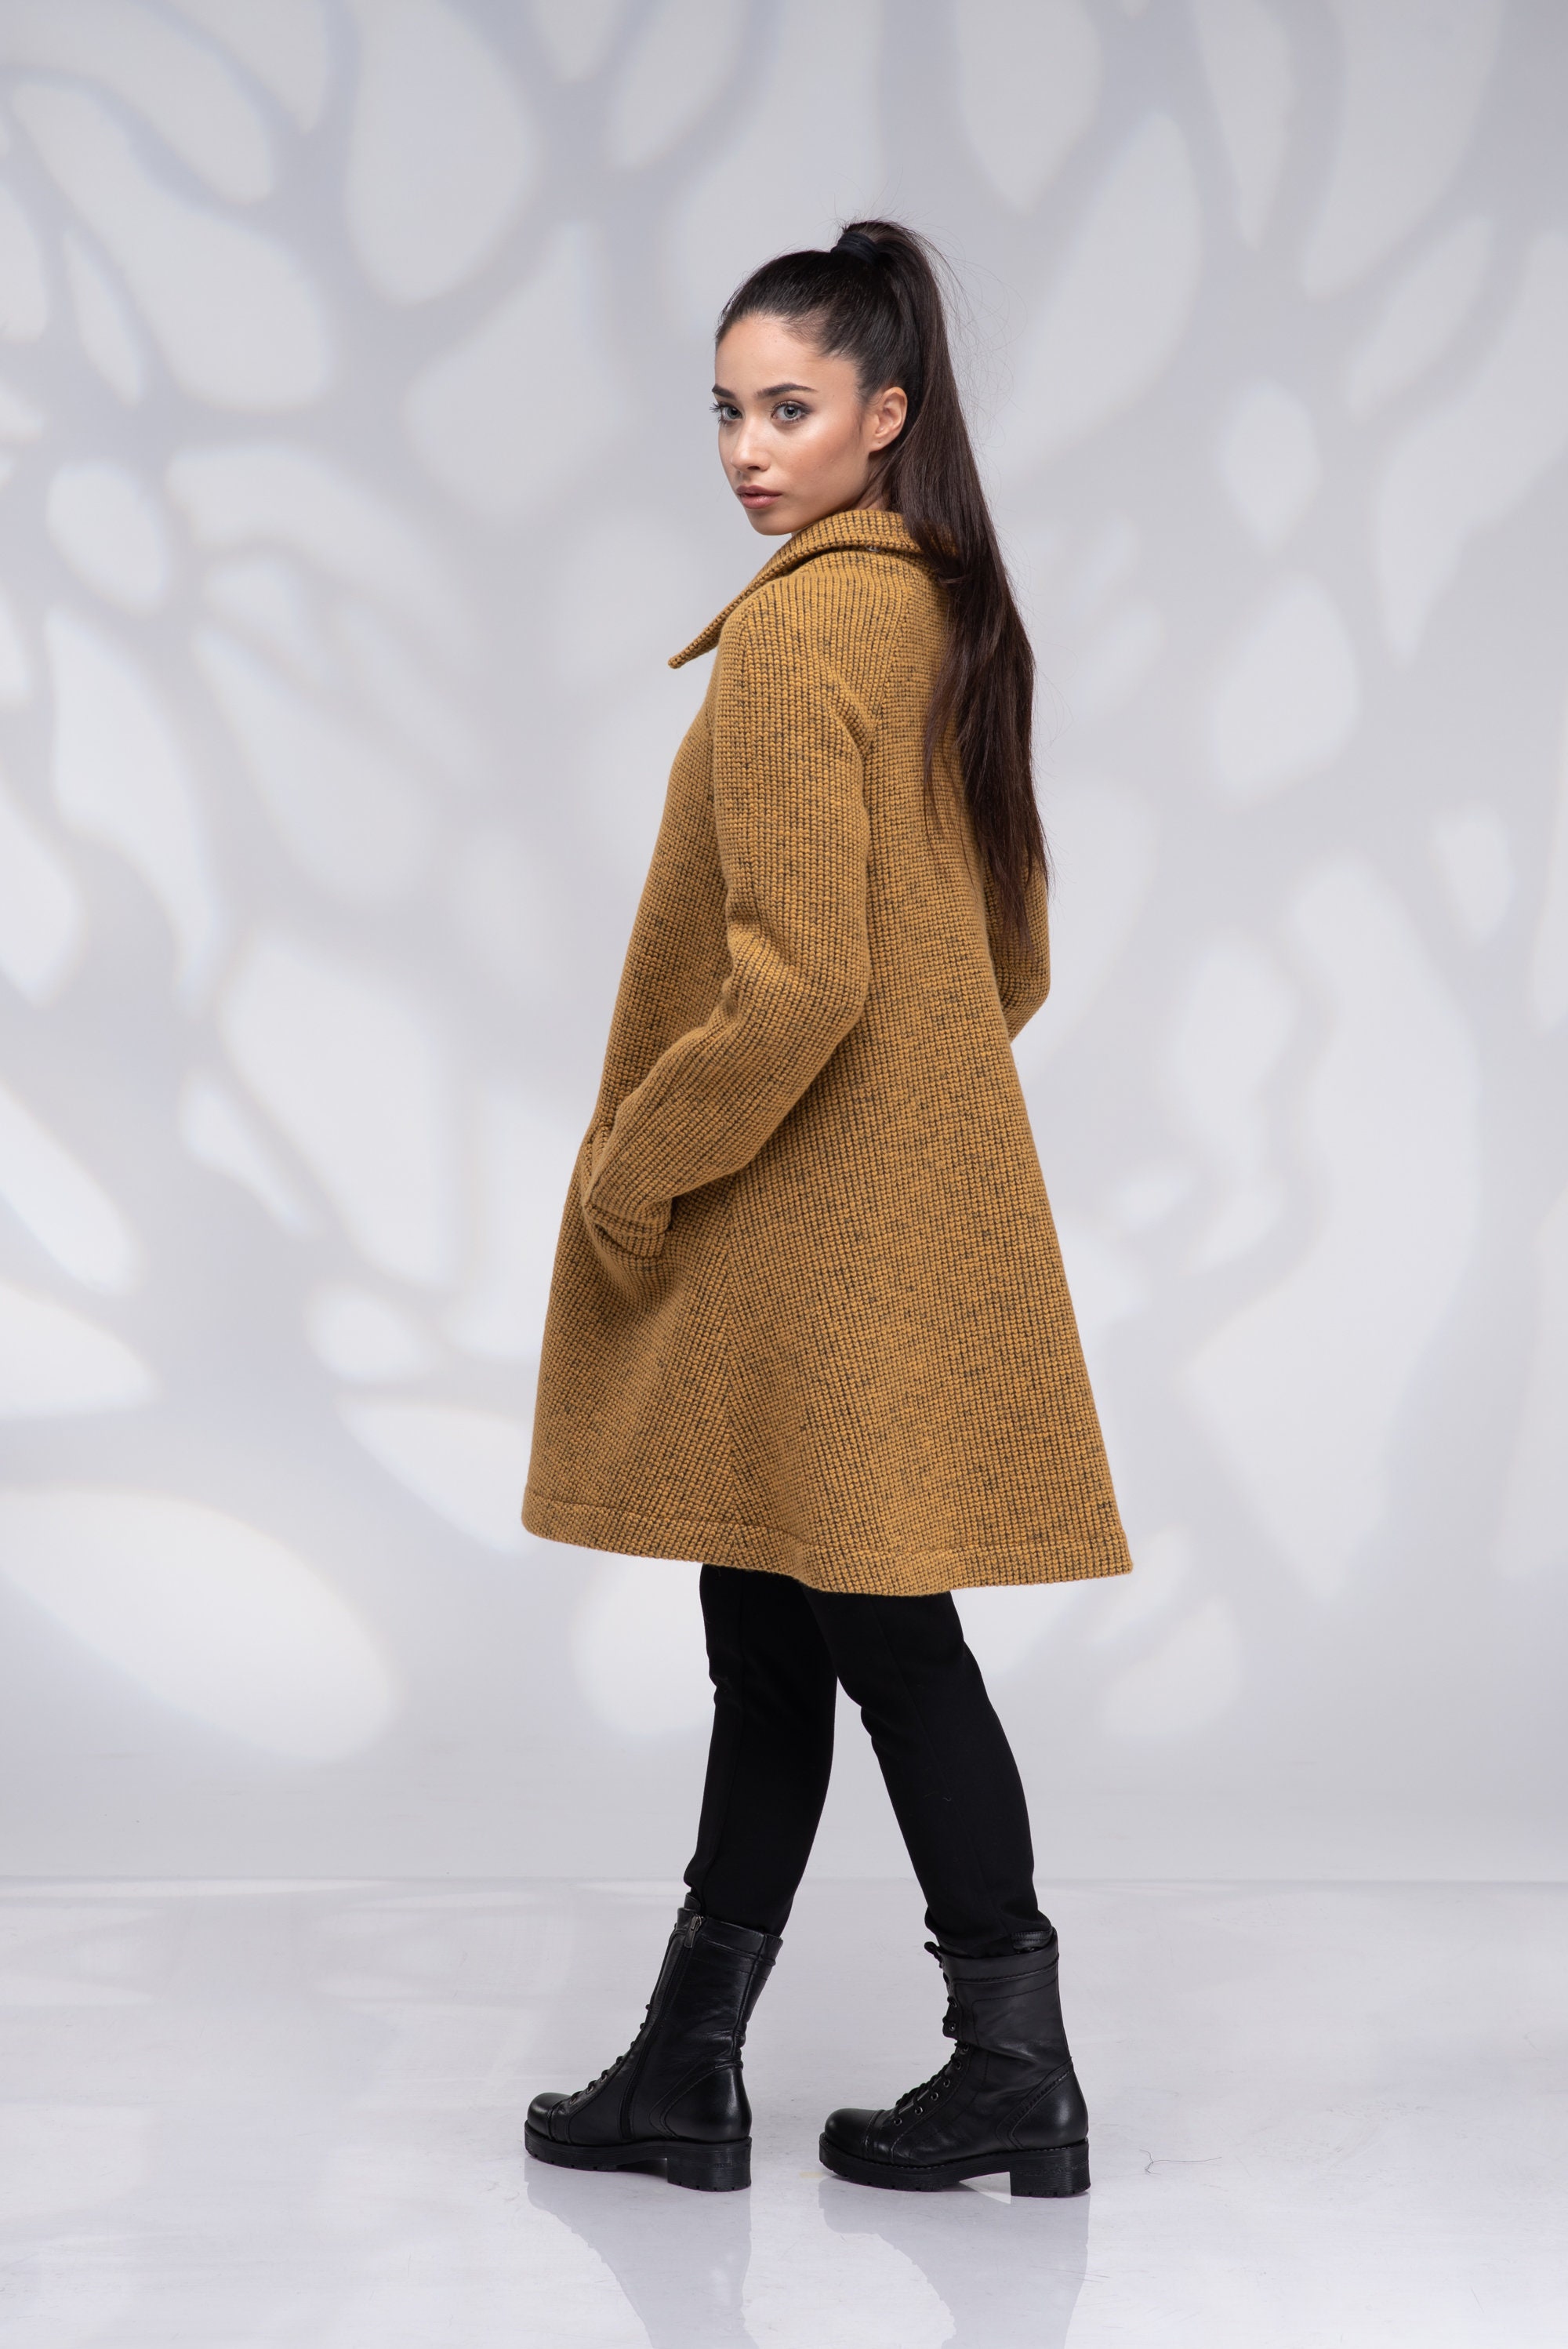 Winter Coat for Women, Wool Swing Coat, Short Coat With Lining 